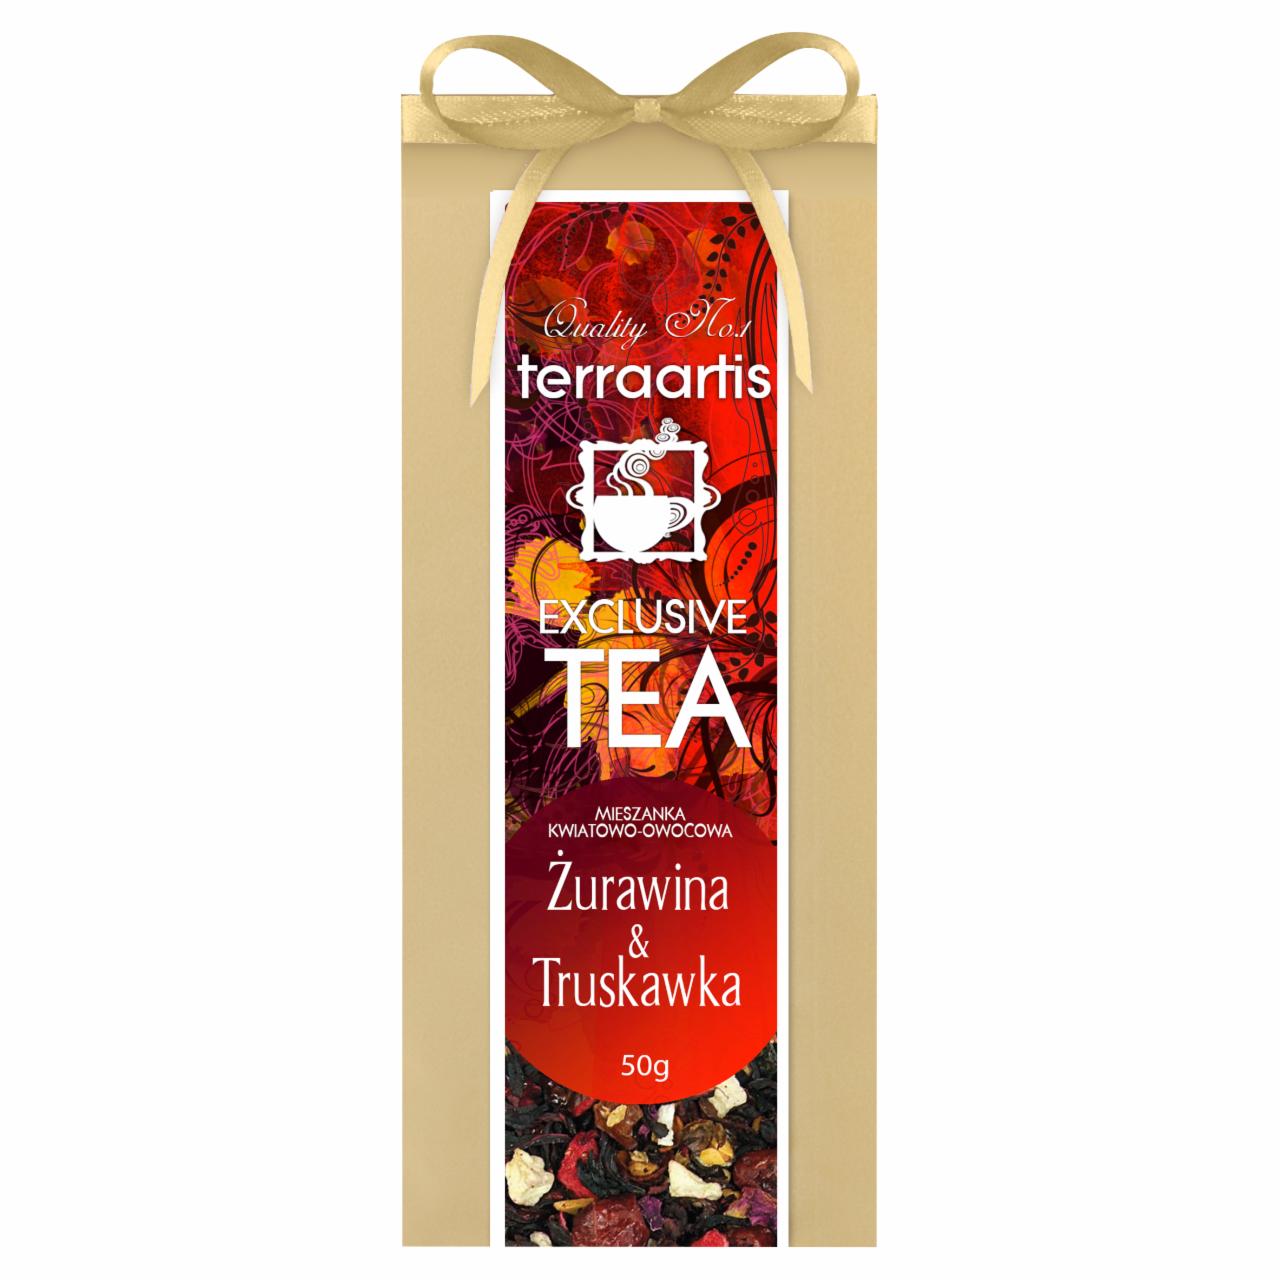 Zdjęcia - Terraartis Exclusive Tea Mieszanka kwiatowo-owocowa żurawina & truskawka 50 g